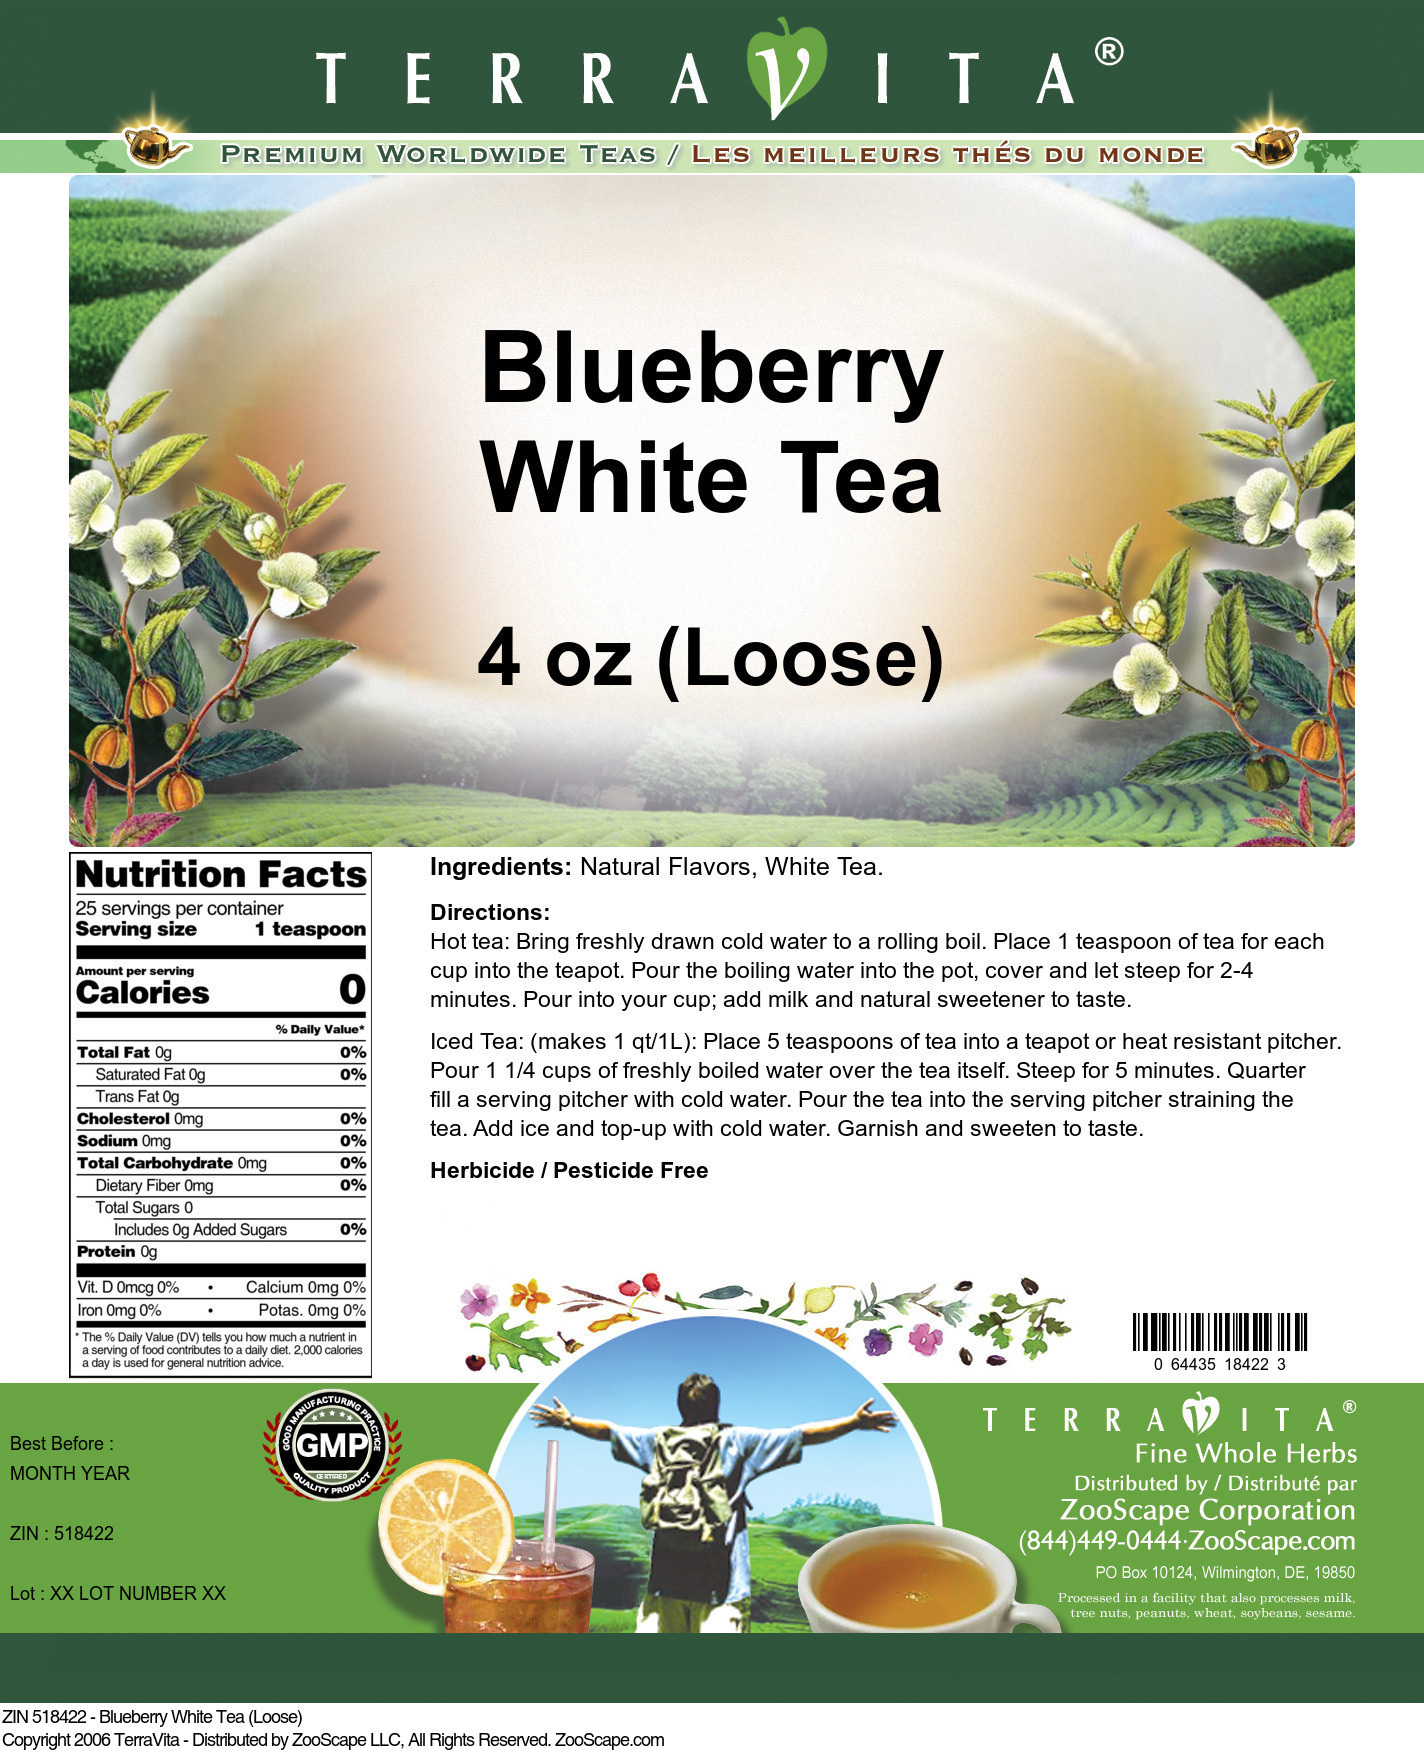 Blueberry White Tea (Loose) - Label